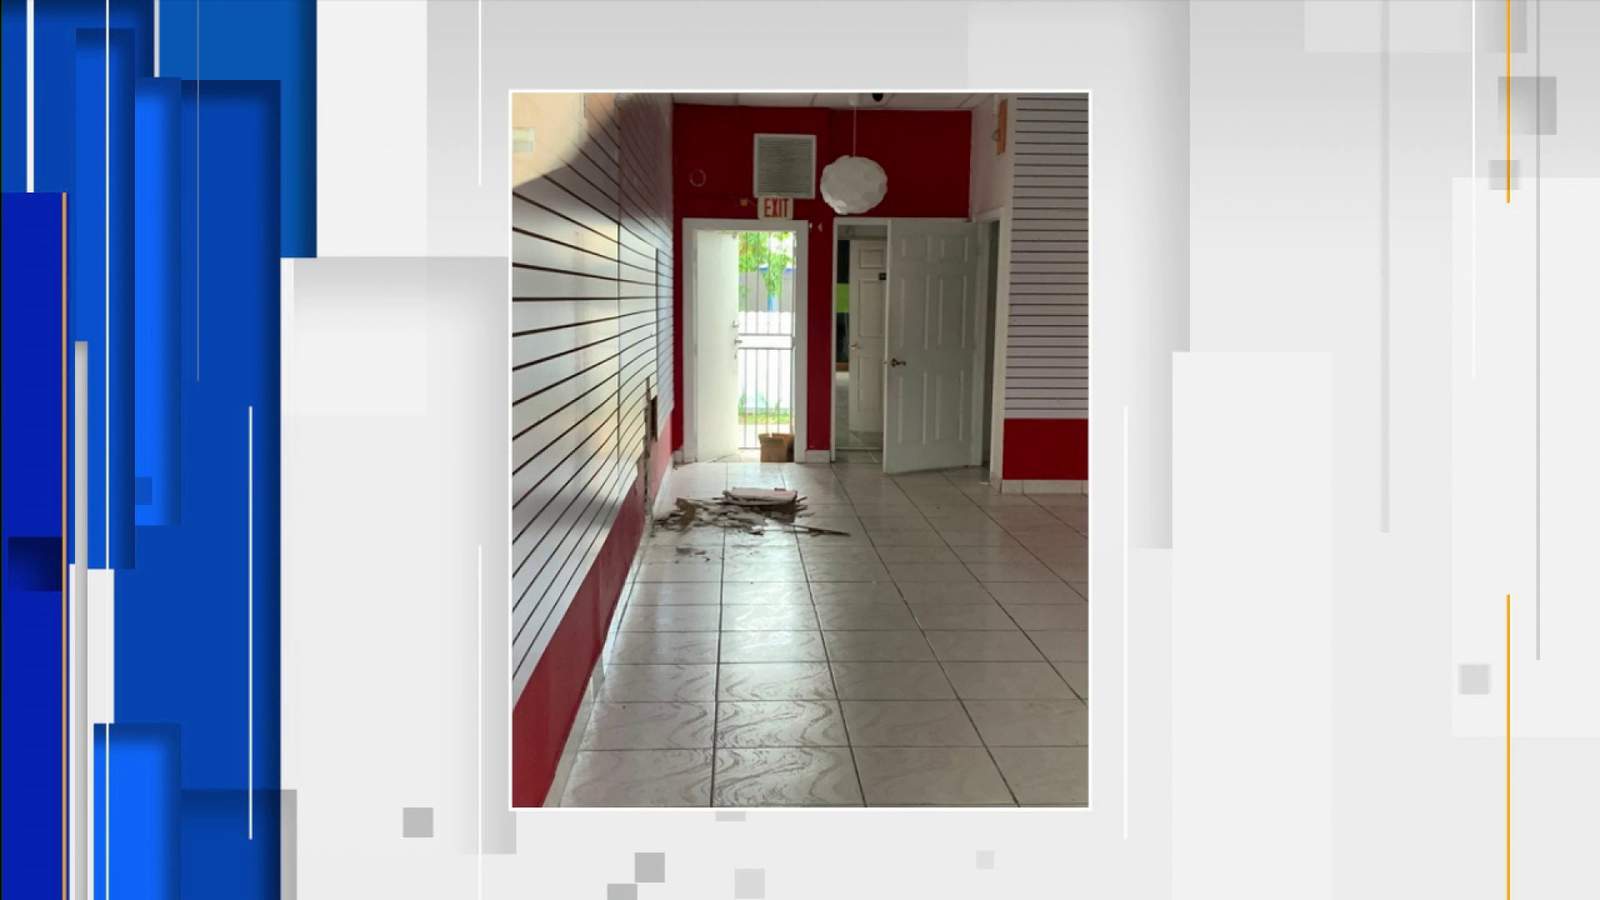 Store owner warns others of burglars who break in through walls